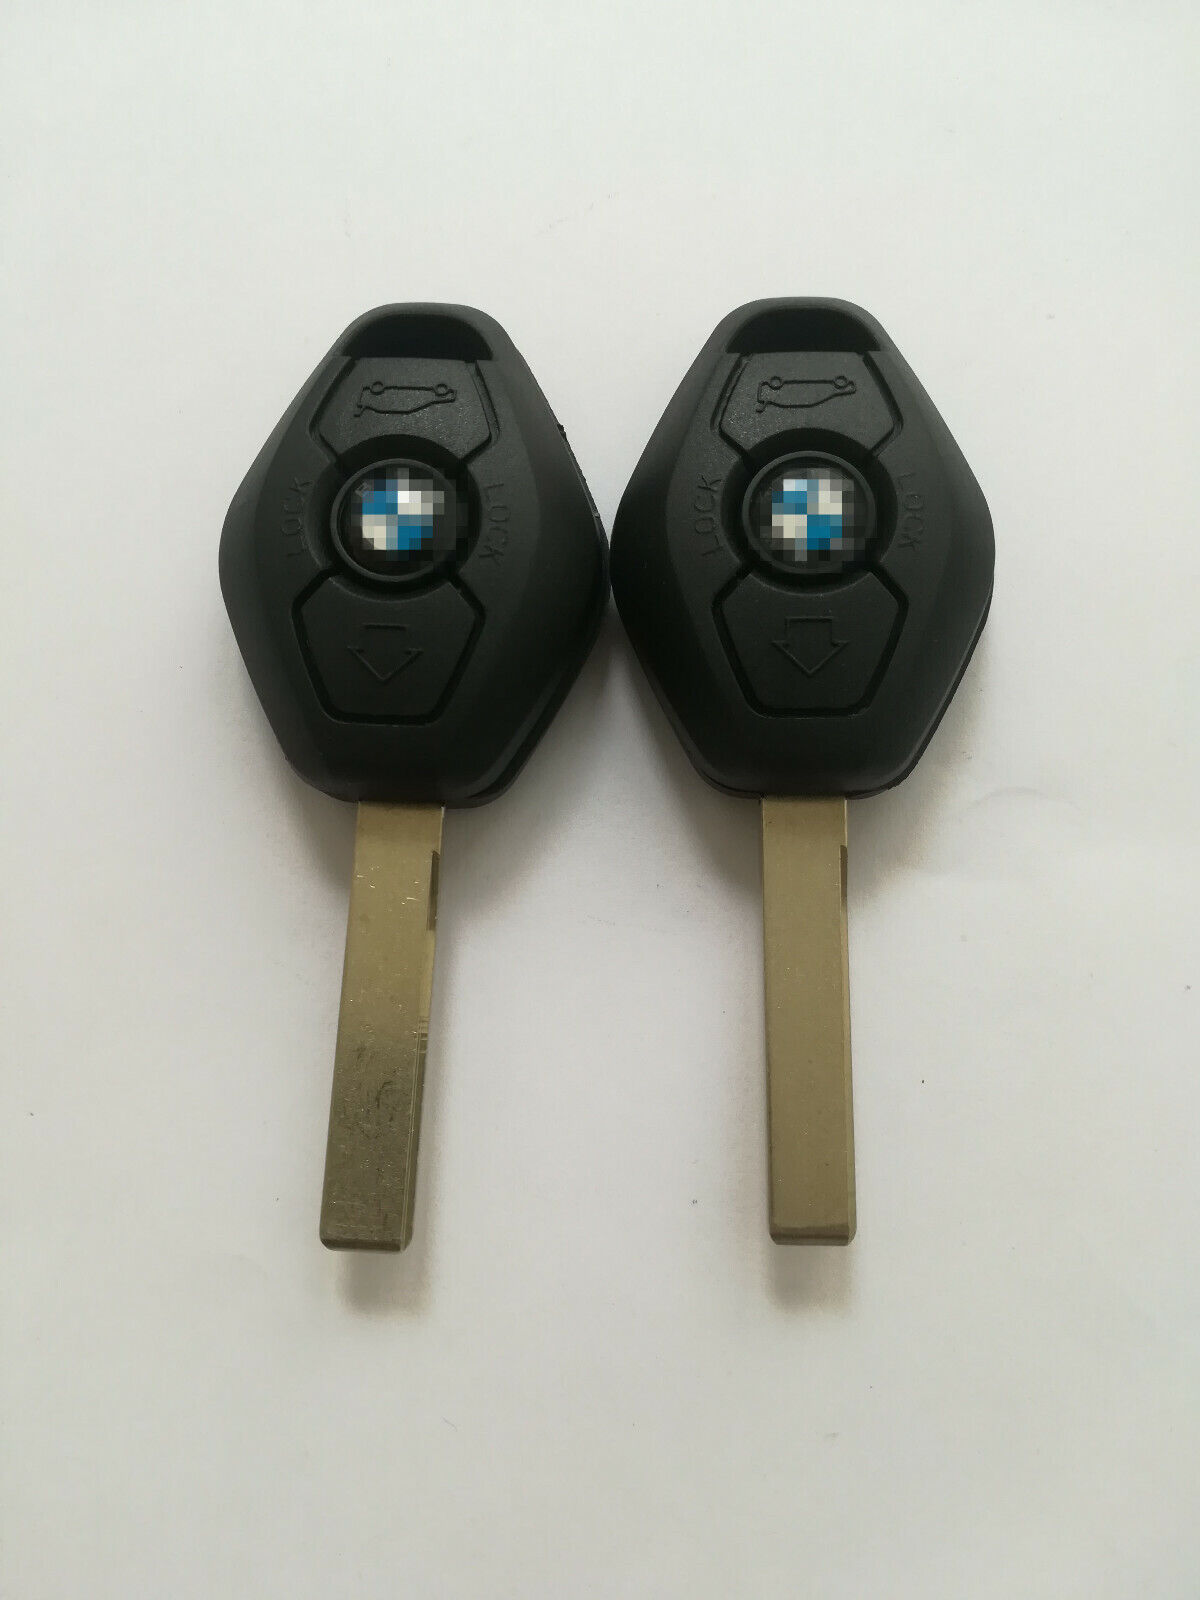 2pcs Replacement Key shell for 2003-2008 BMW Z4 X5 X3 M3 Series LX8FZV keyless